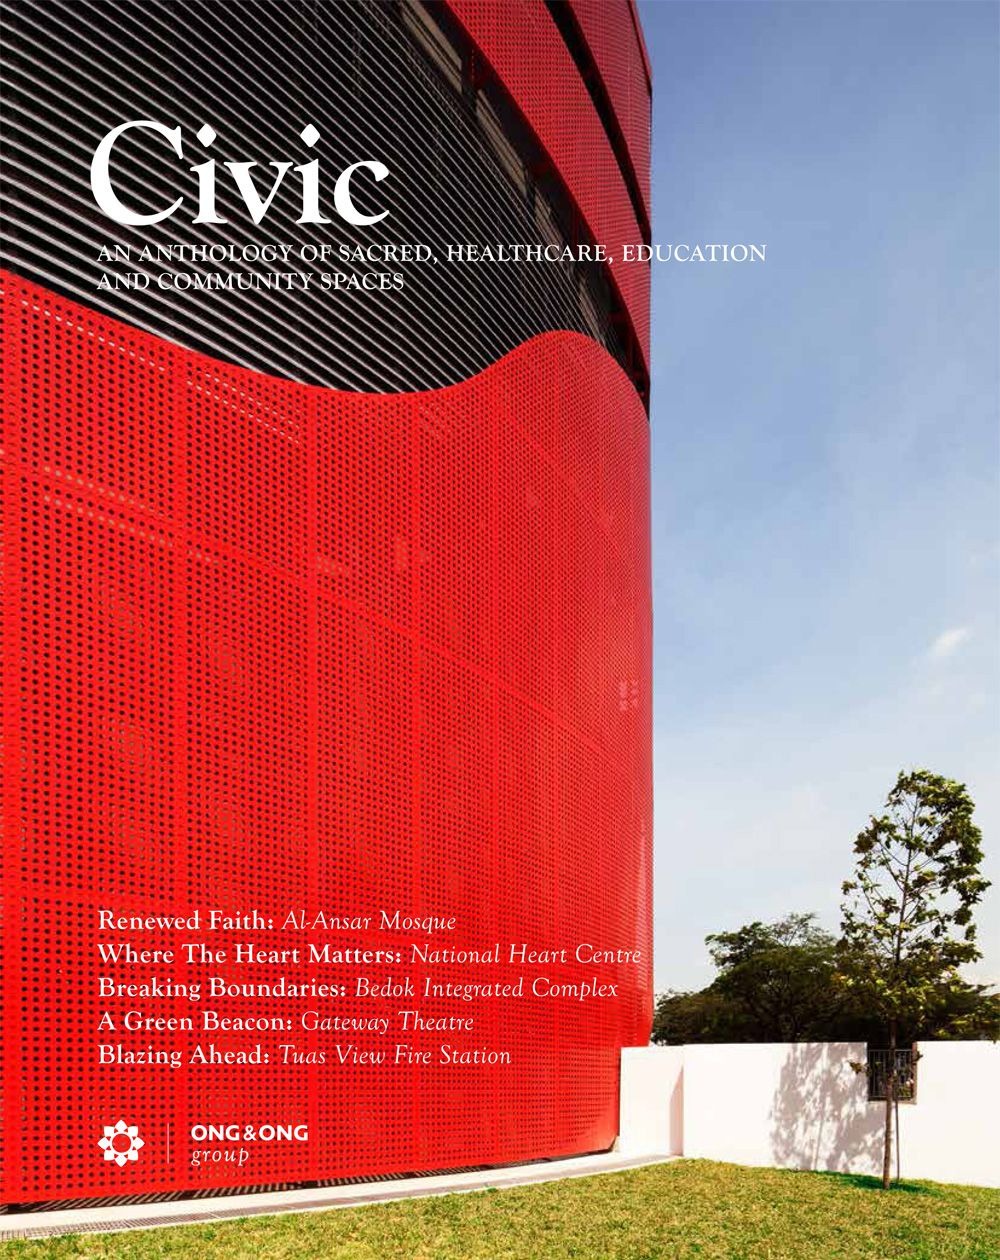 cover image of Civic, Anthology